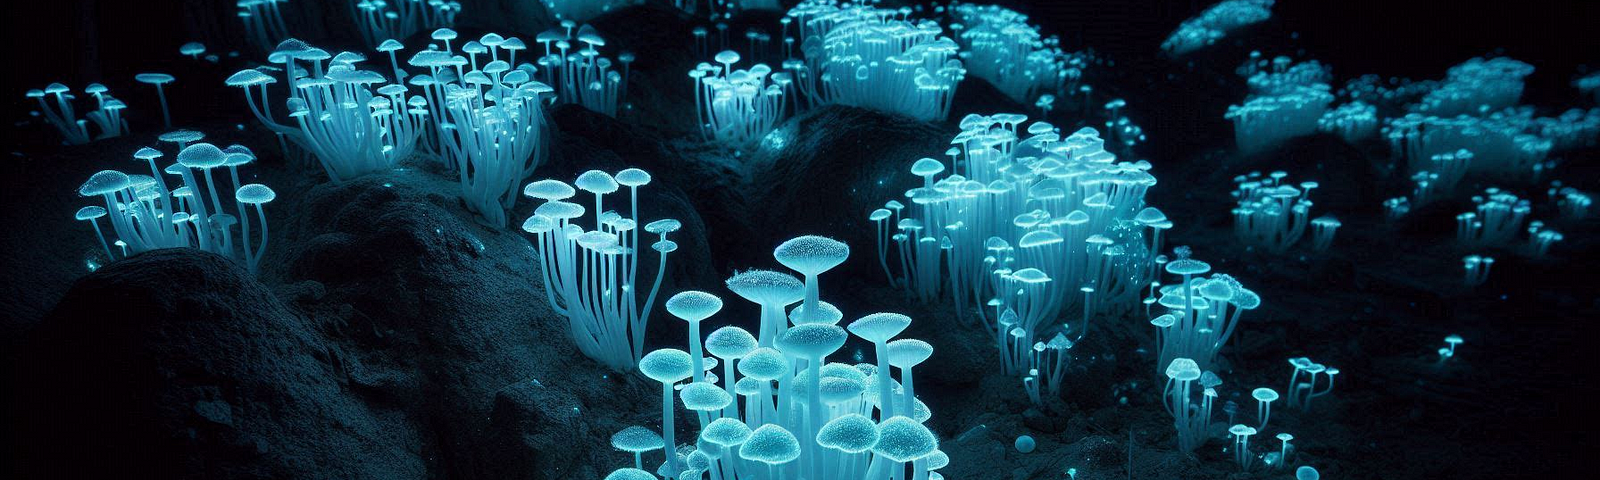 bioluminescent fungi growing in the dark